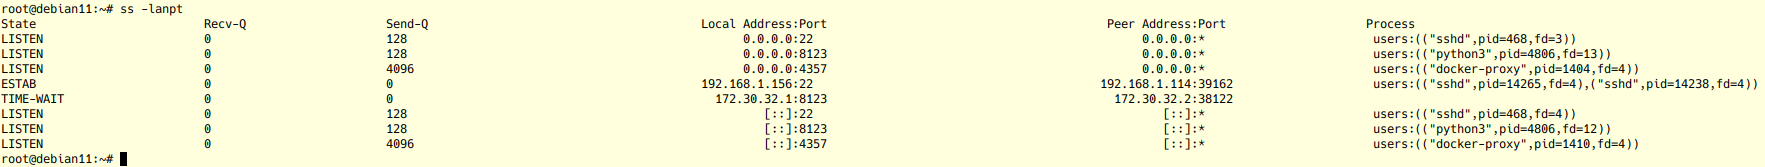 21-firewall_portscan.png